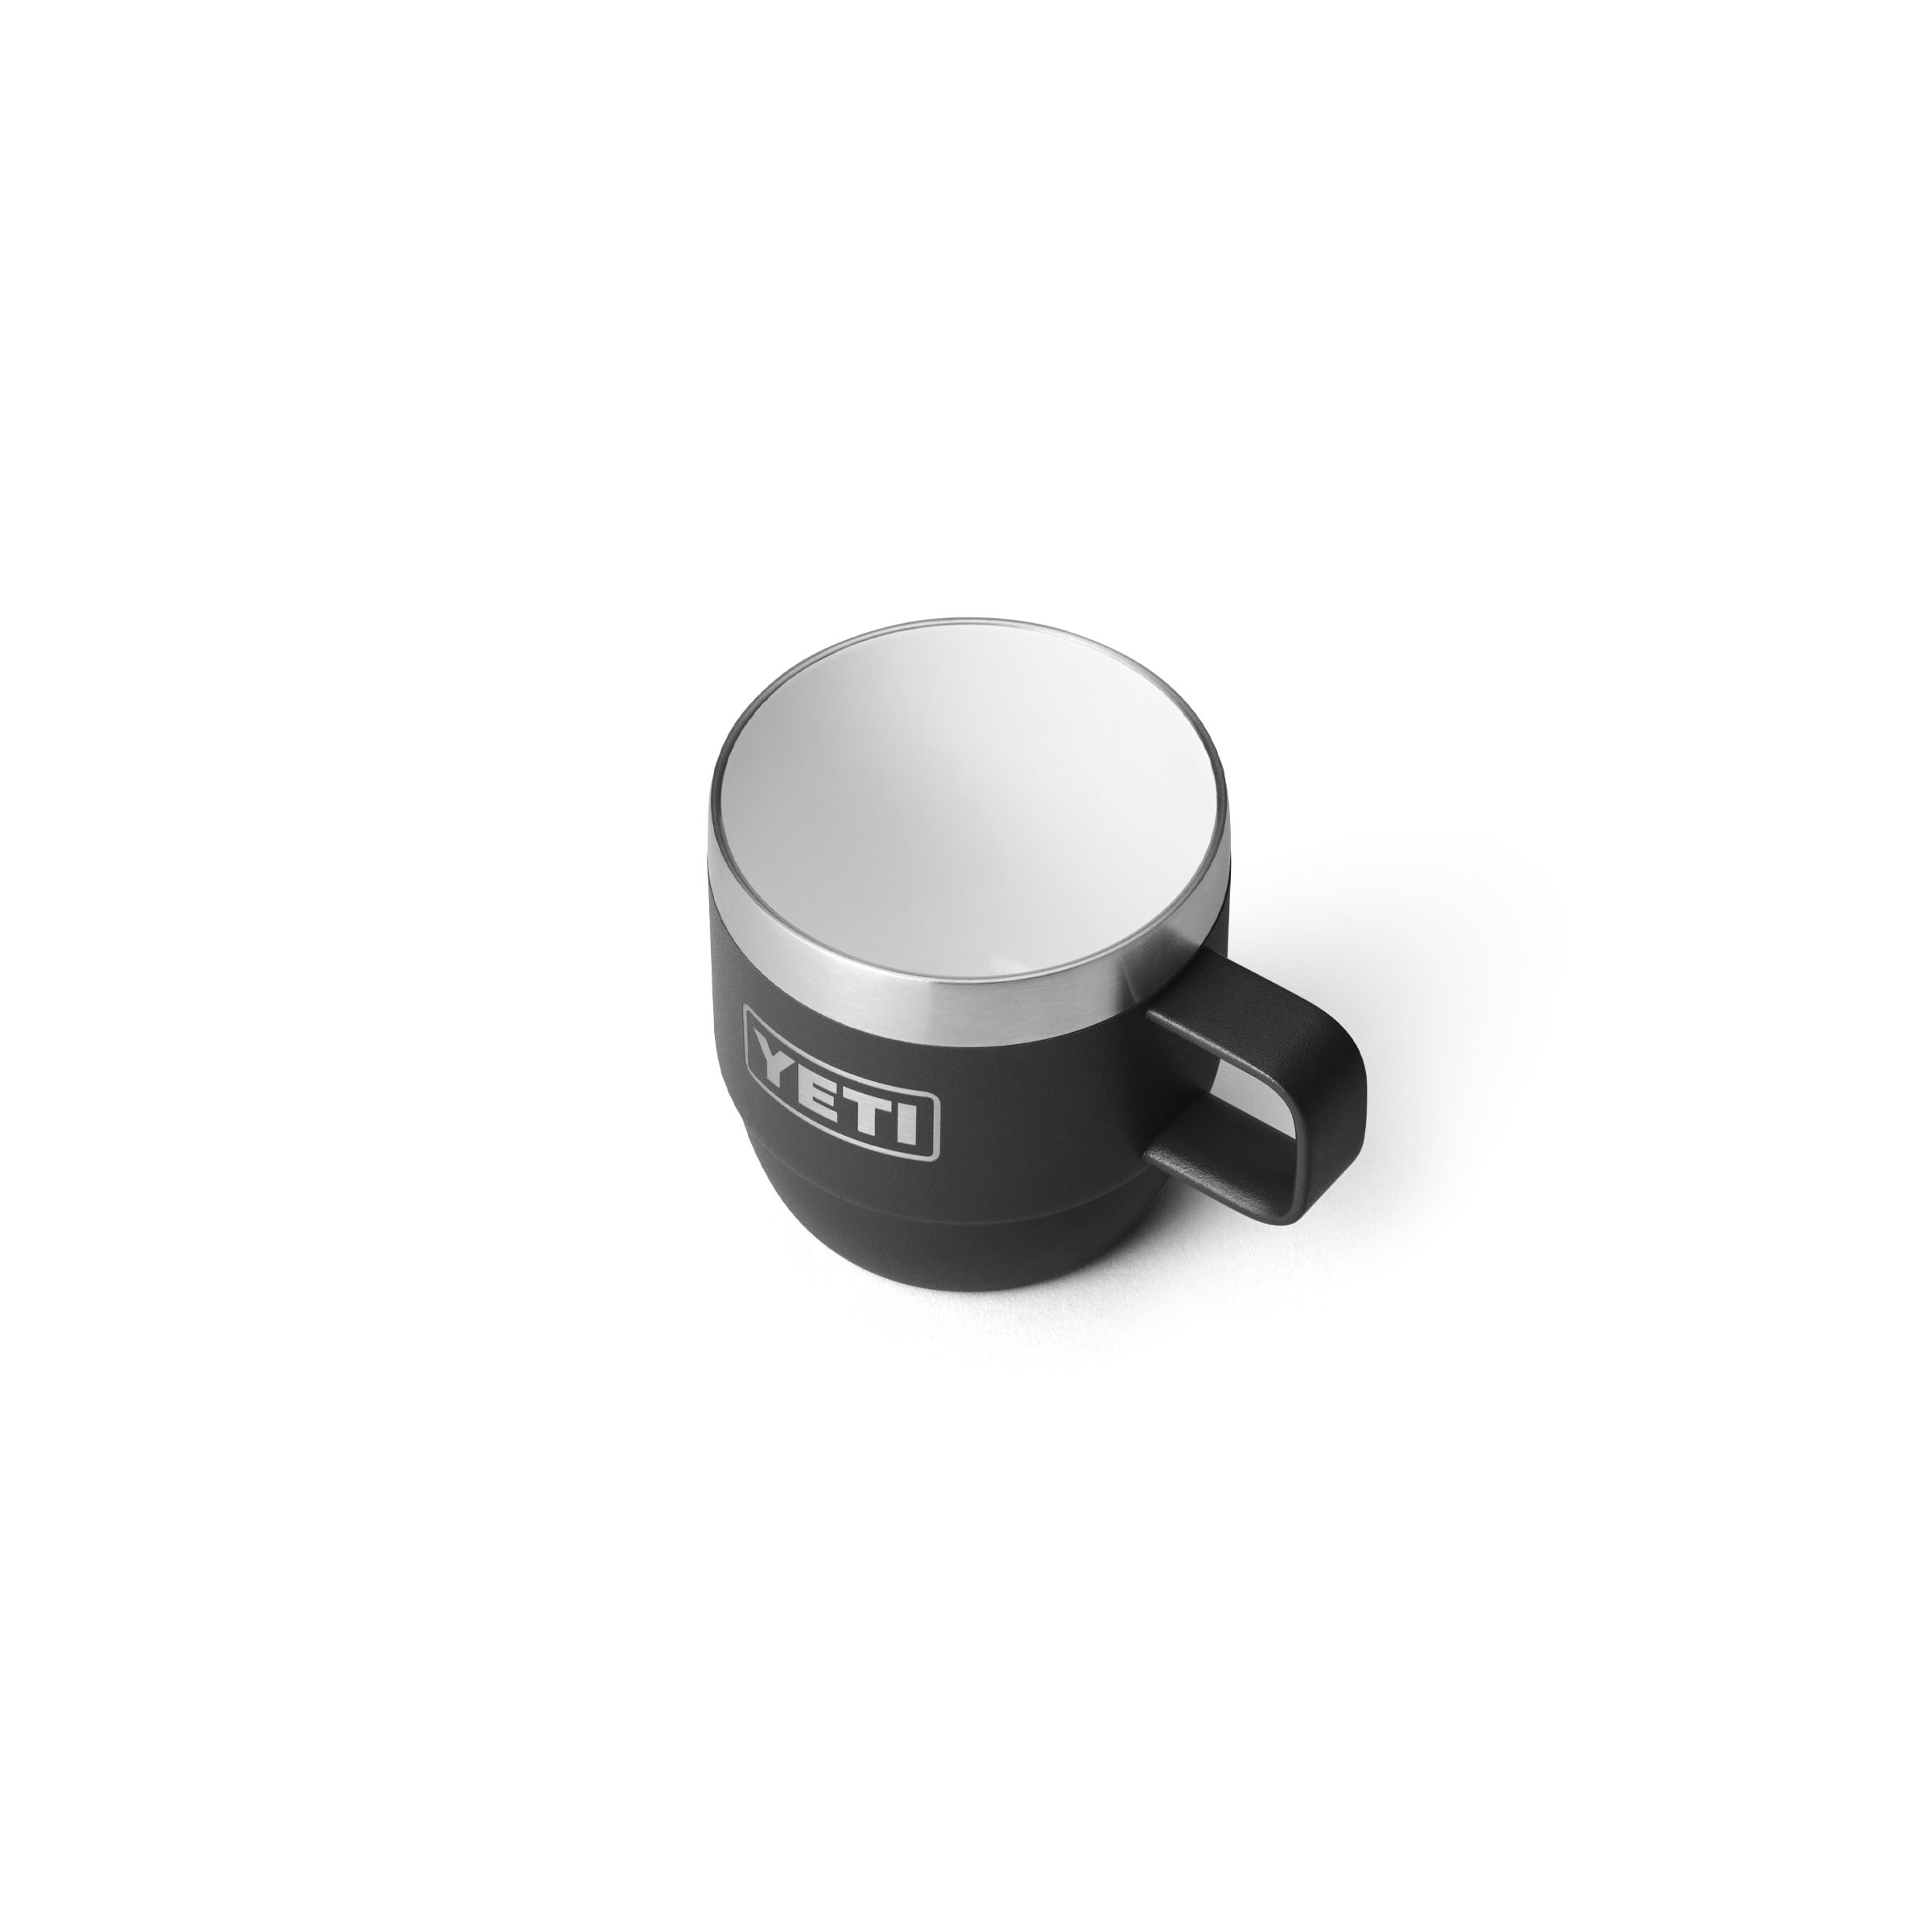 Yeti 6oz Stackable Mugs Review : r/espresso